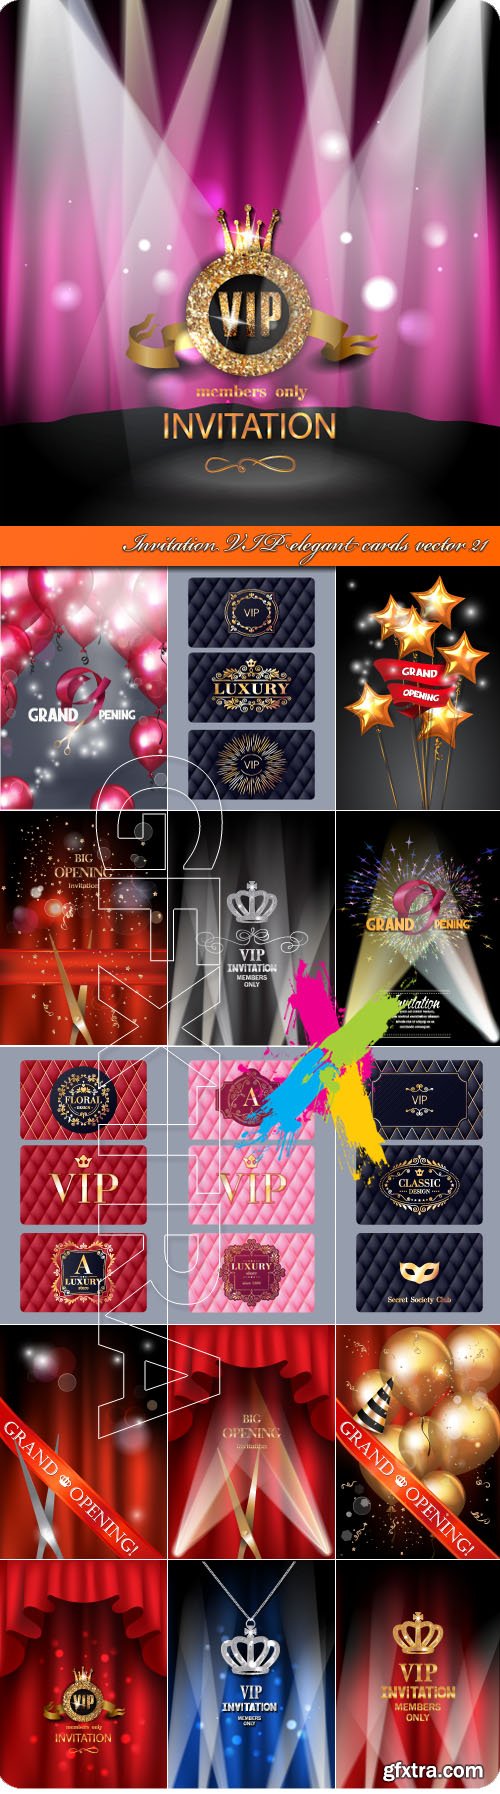 Invitation VIP elegant cards vector 21